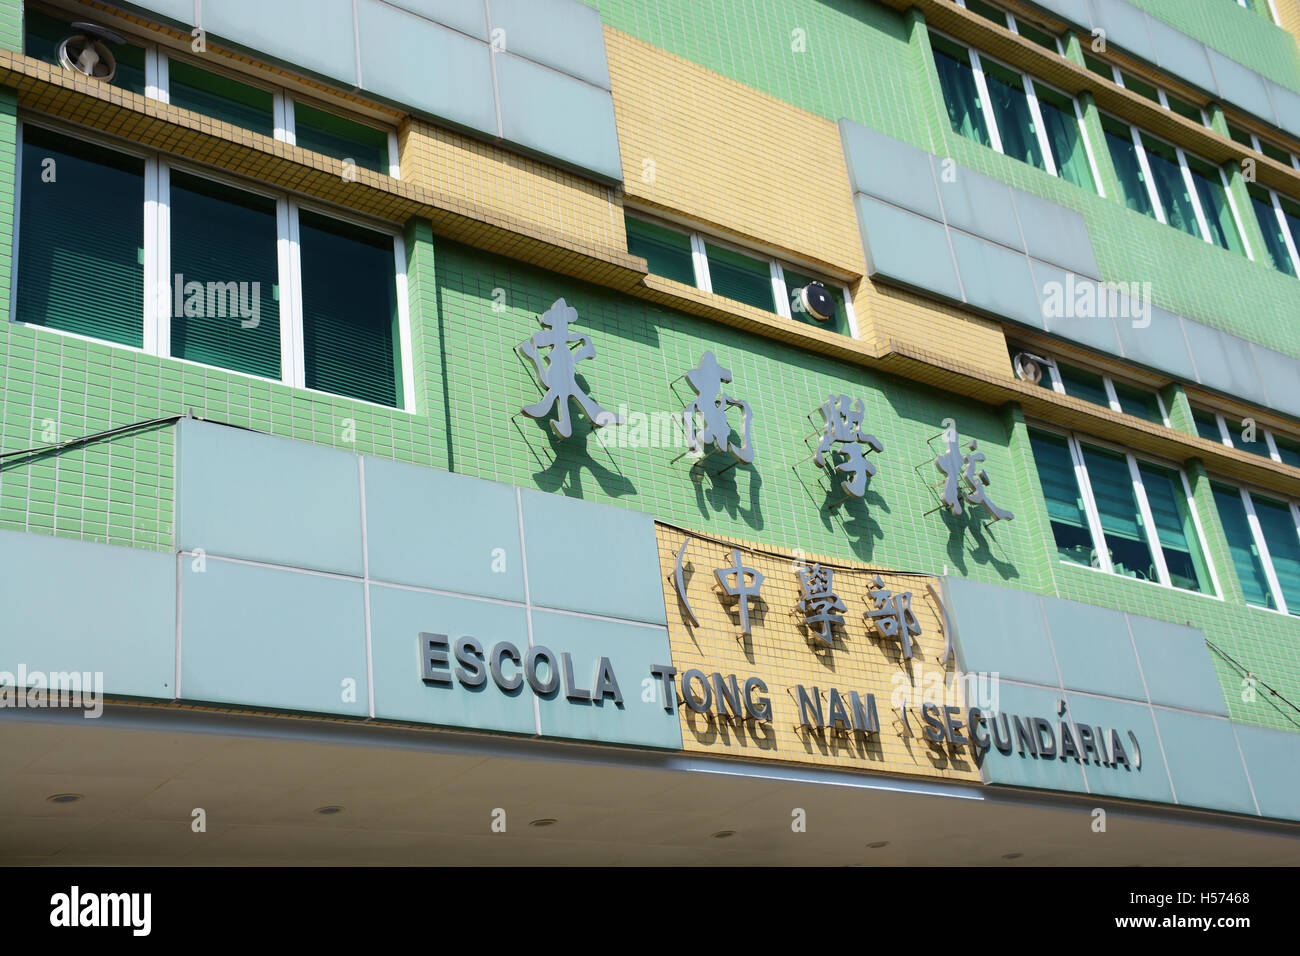 Escola Tong Nam Secundaria Macau China Stock Photo